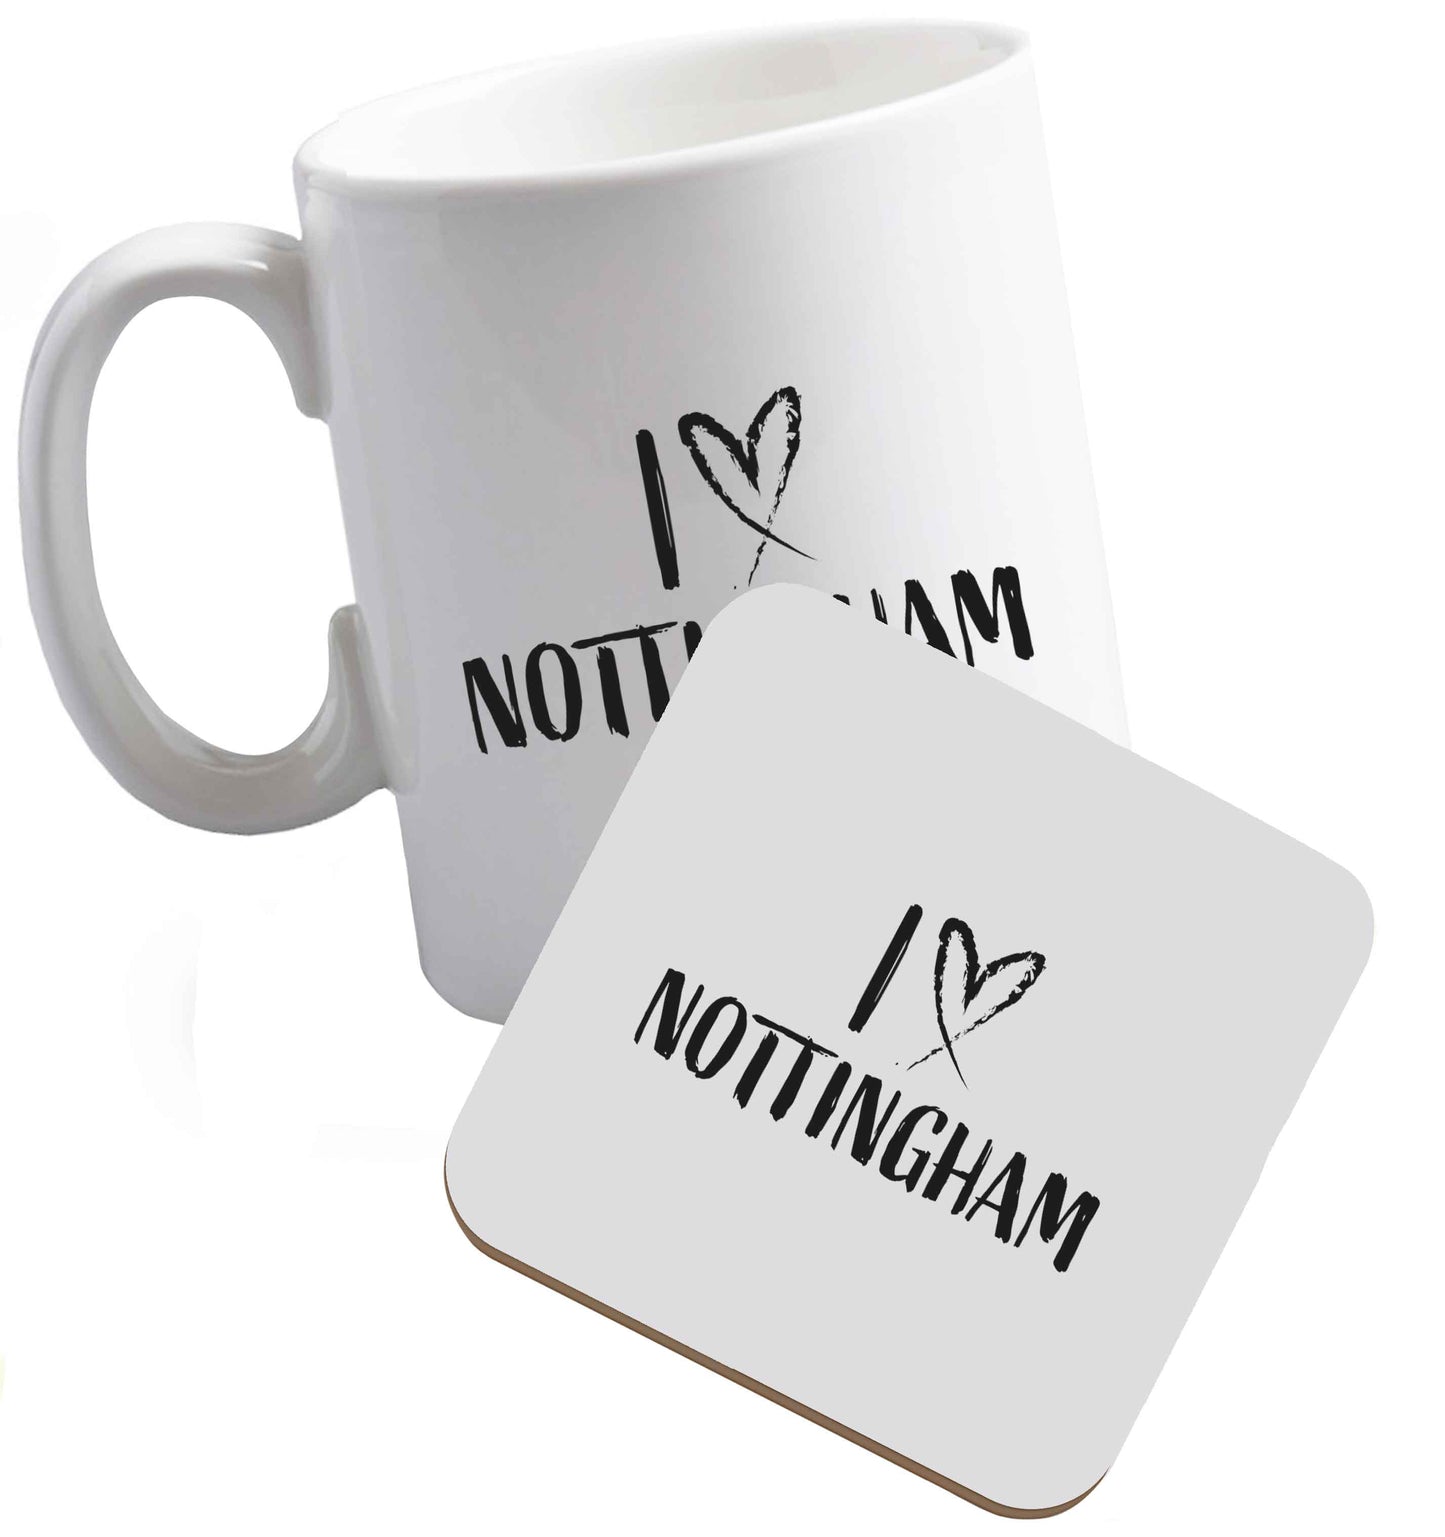 10 oz I love Nottingham ceramic mug and coaster set right handed